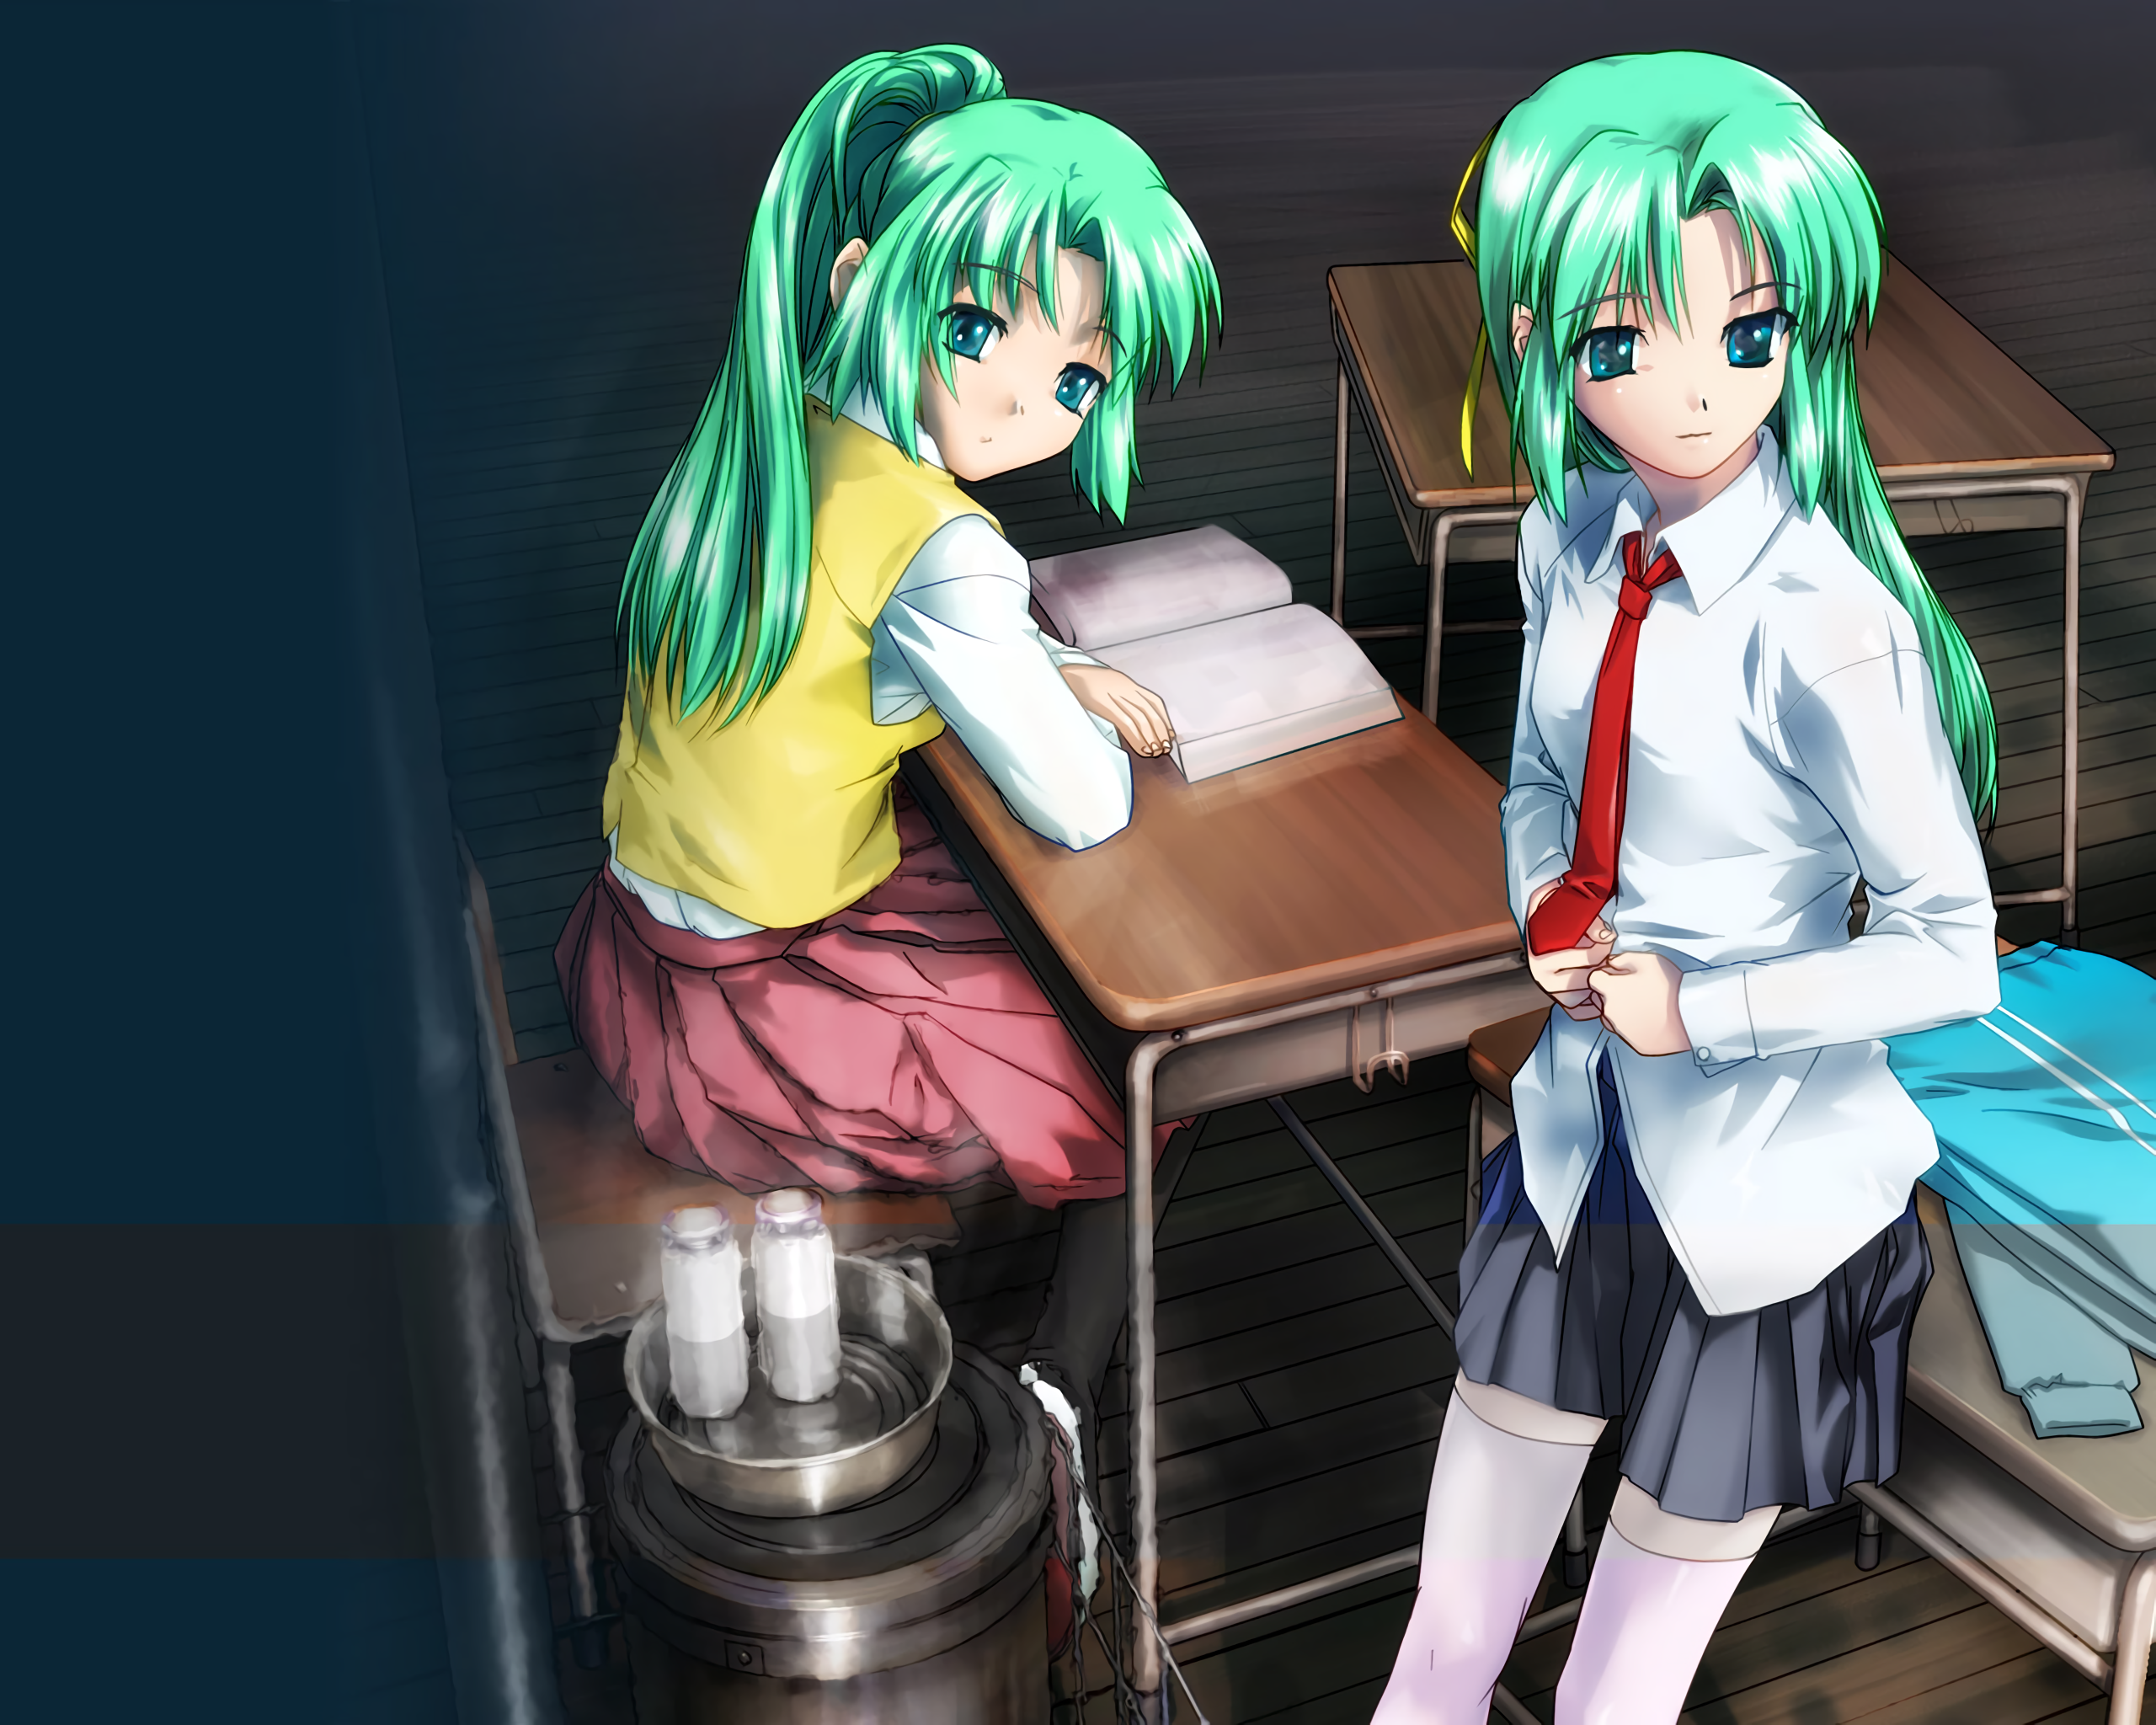 Twin girls in green school uniforms with ties, Sonozaki Shion and Sonozaki Mion, posing for a wallpaper.